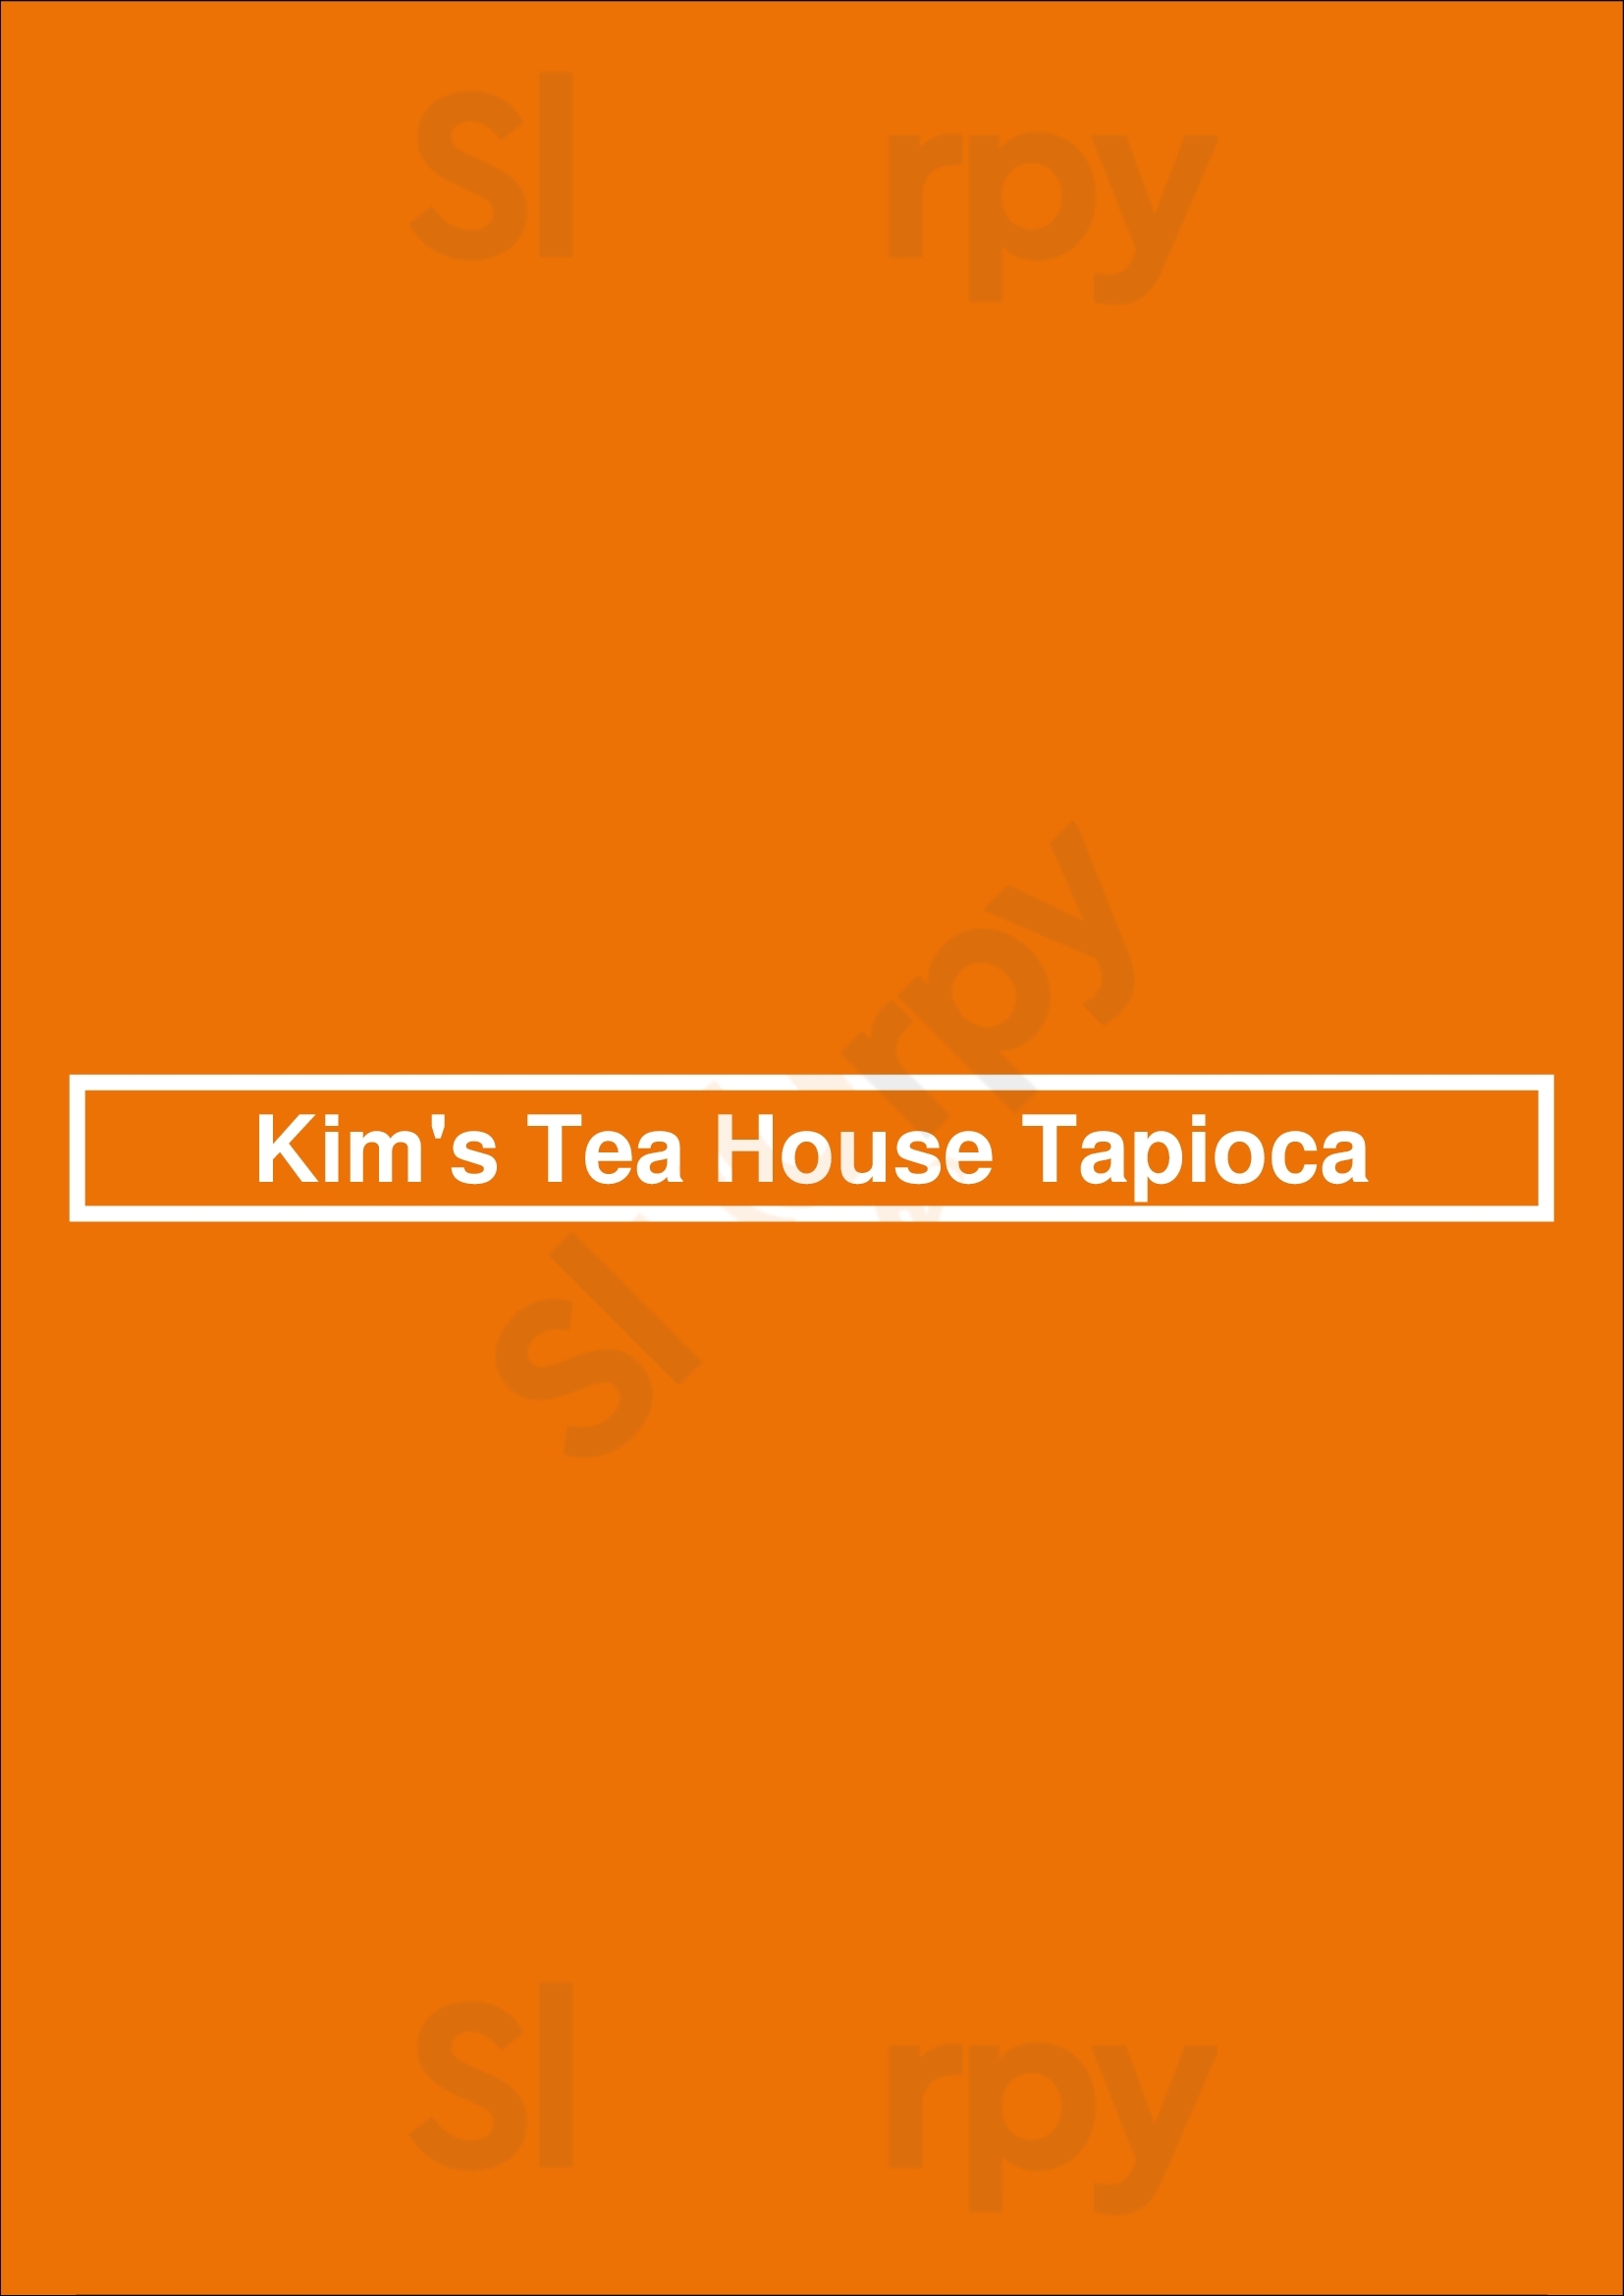 Kim's Tea House Tapioca Houston Menu - 1